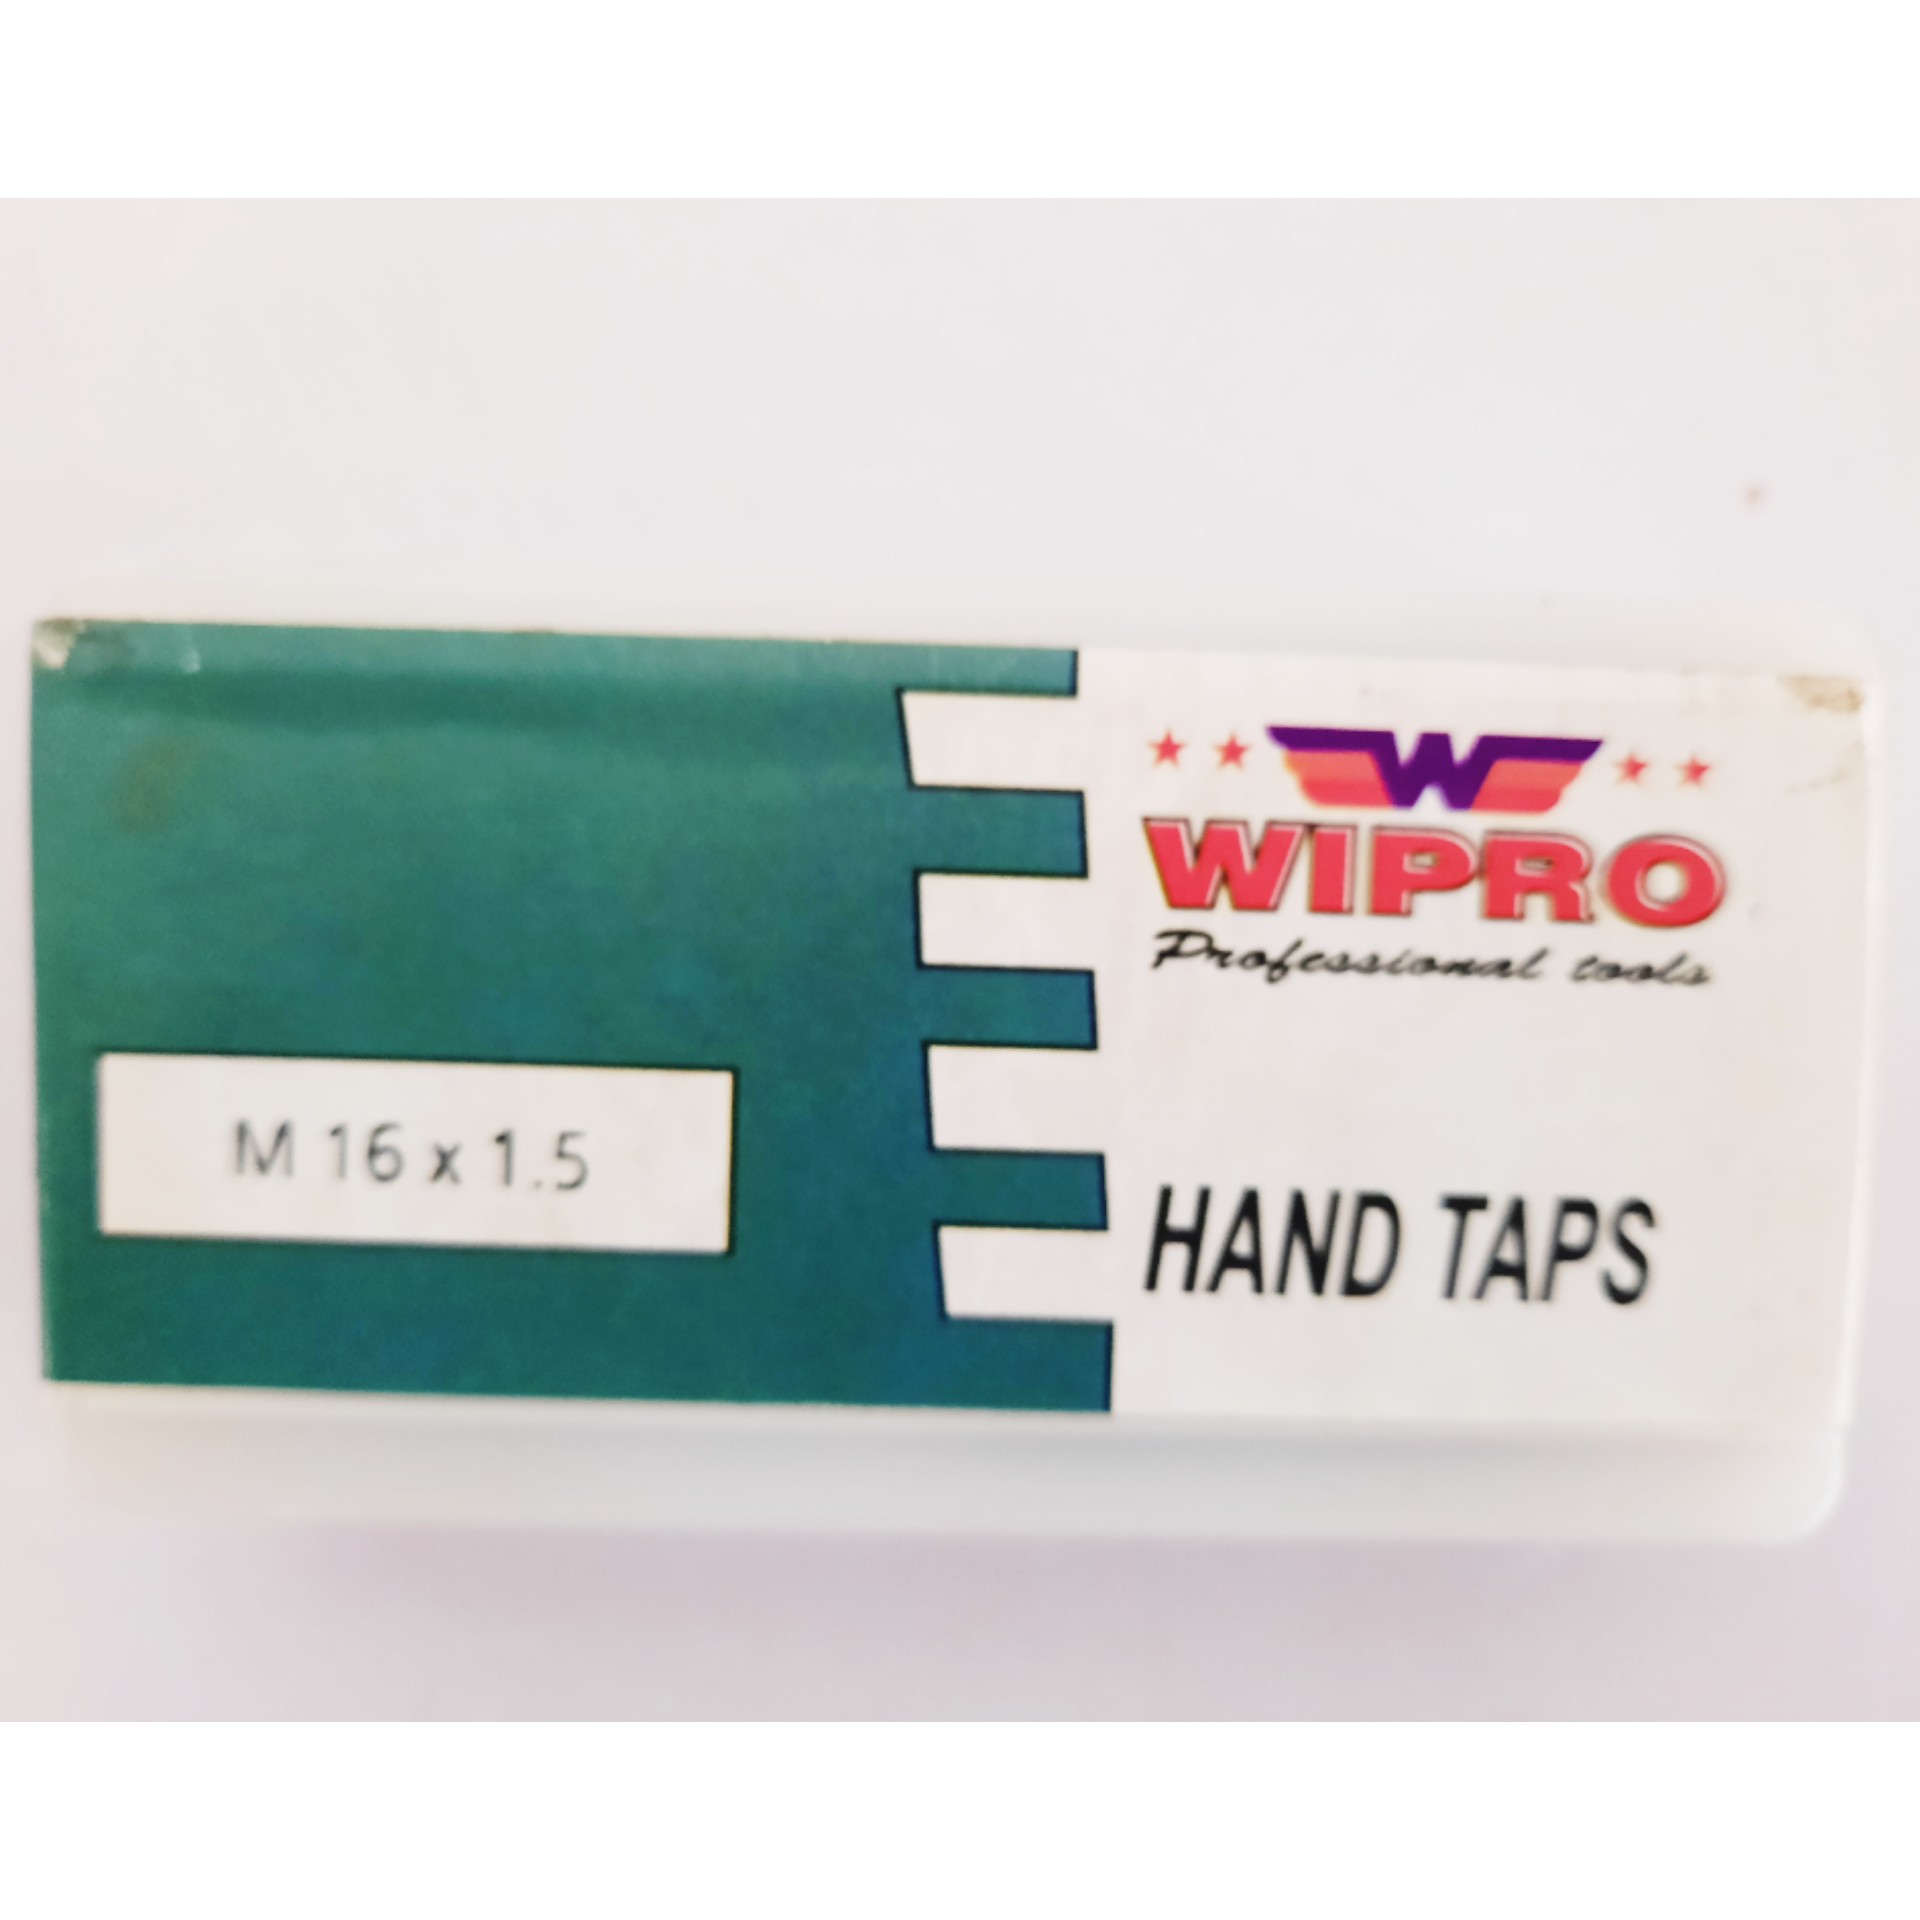 Hand Taps Wipro M16x1koma5 5